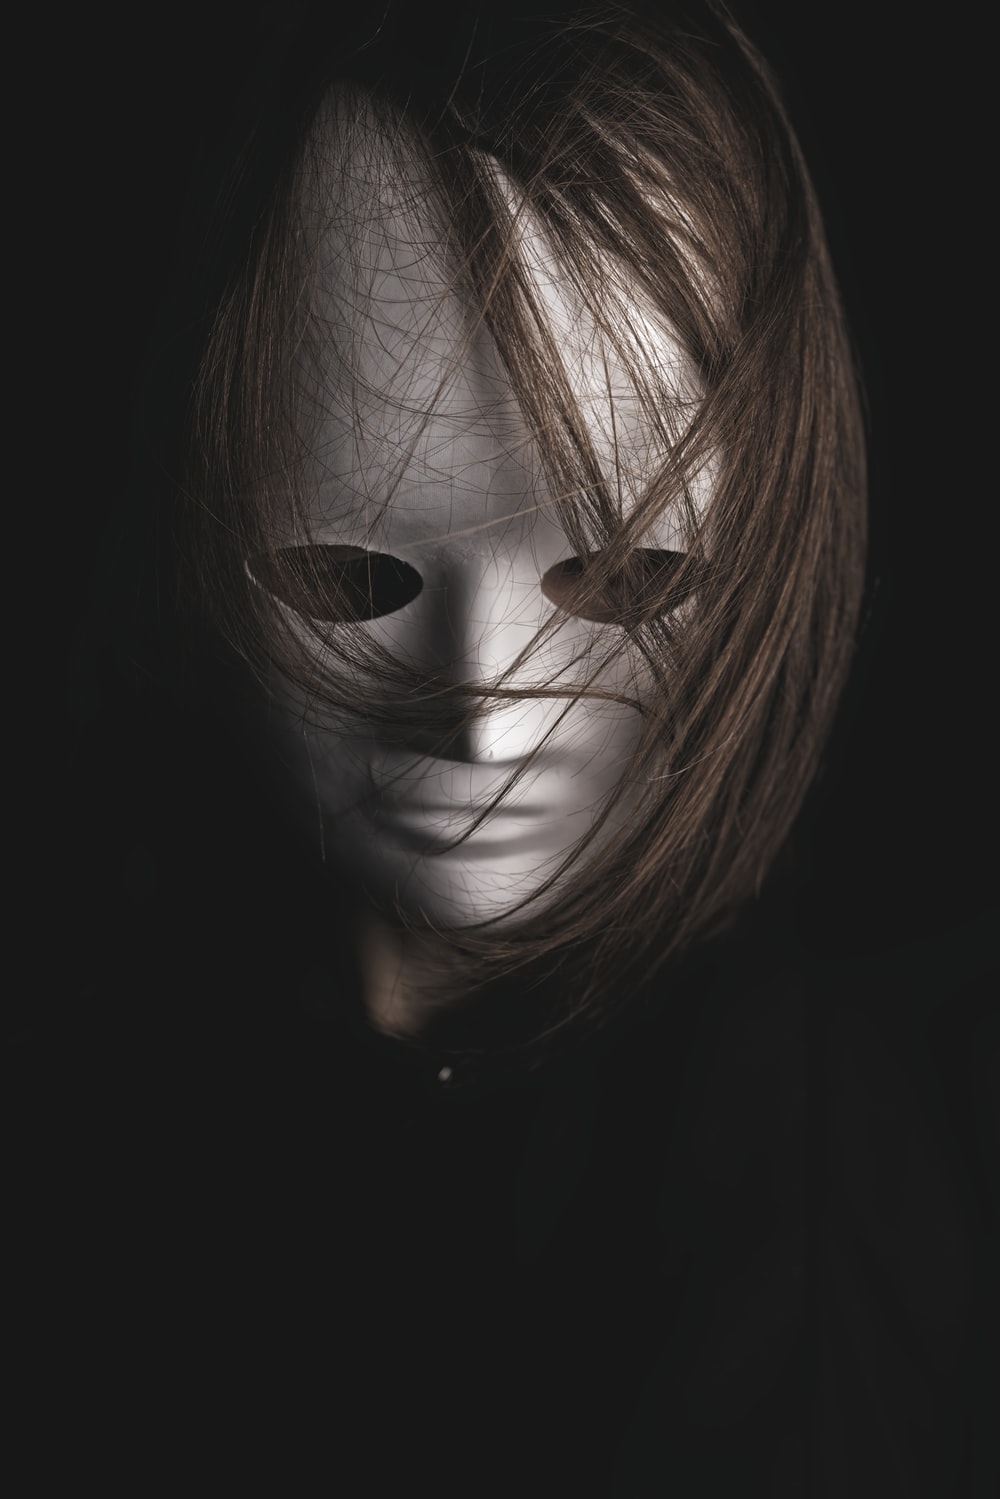 Drama Mask Picture. Download Free Image